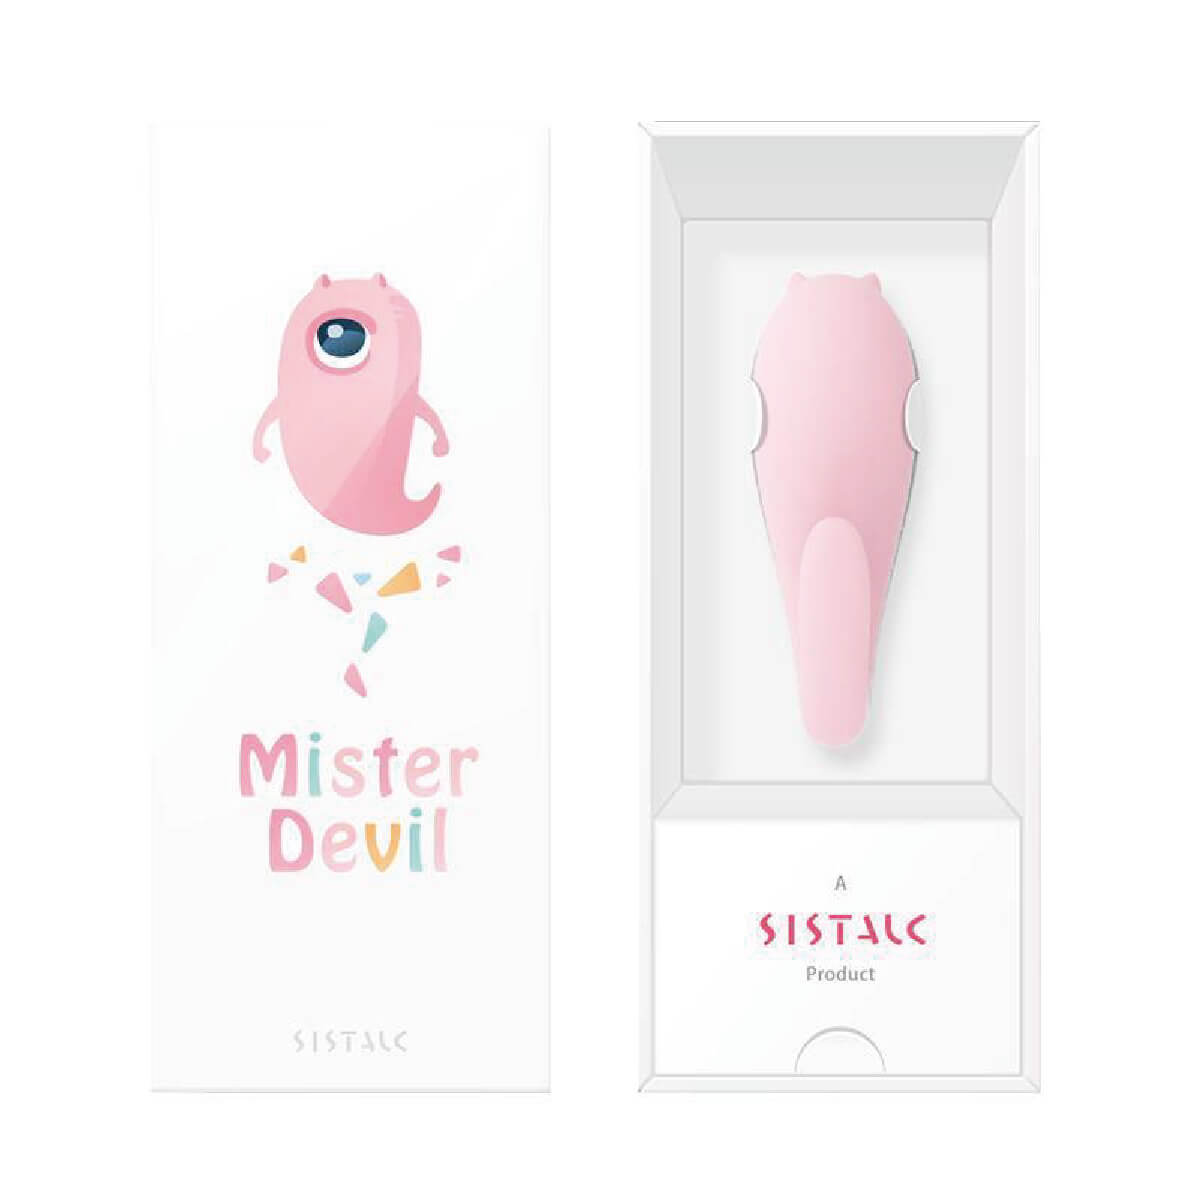 The devilishly good egg vibrator Mister Devil by Monster Pub - Product image